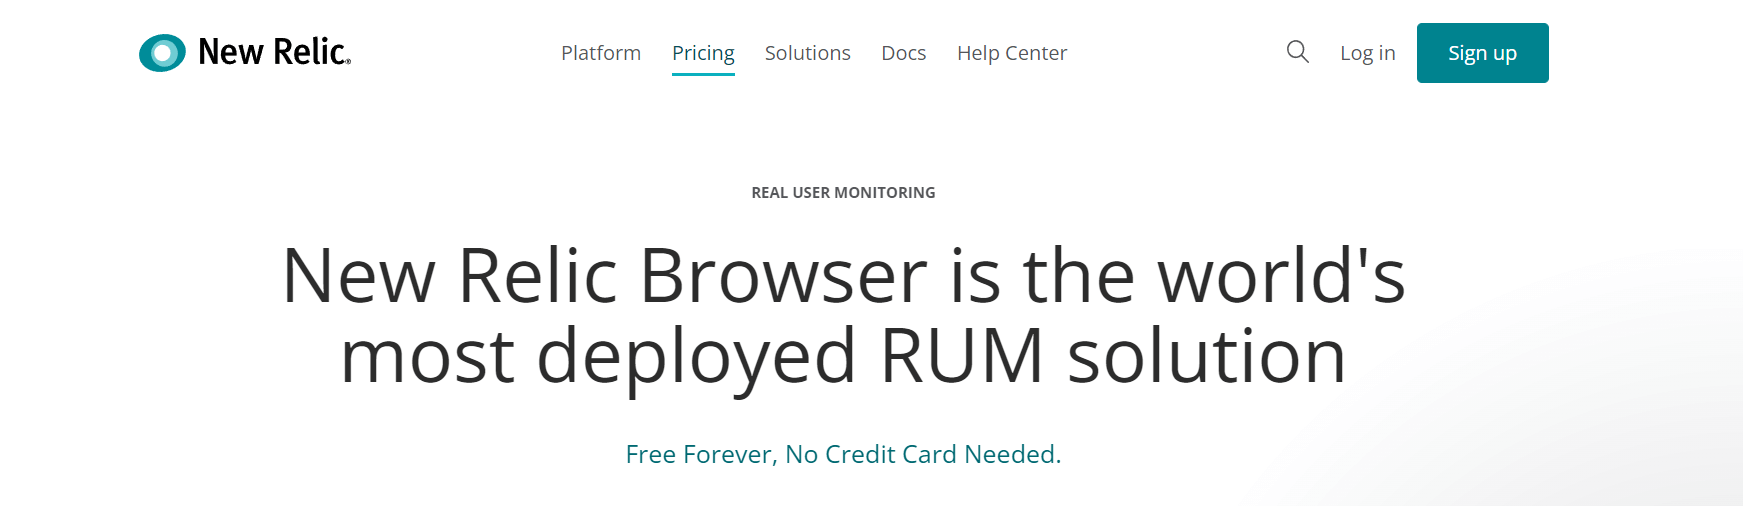 Screenshot showing New Relic&rsquo;s RUM